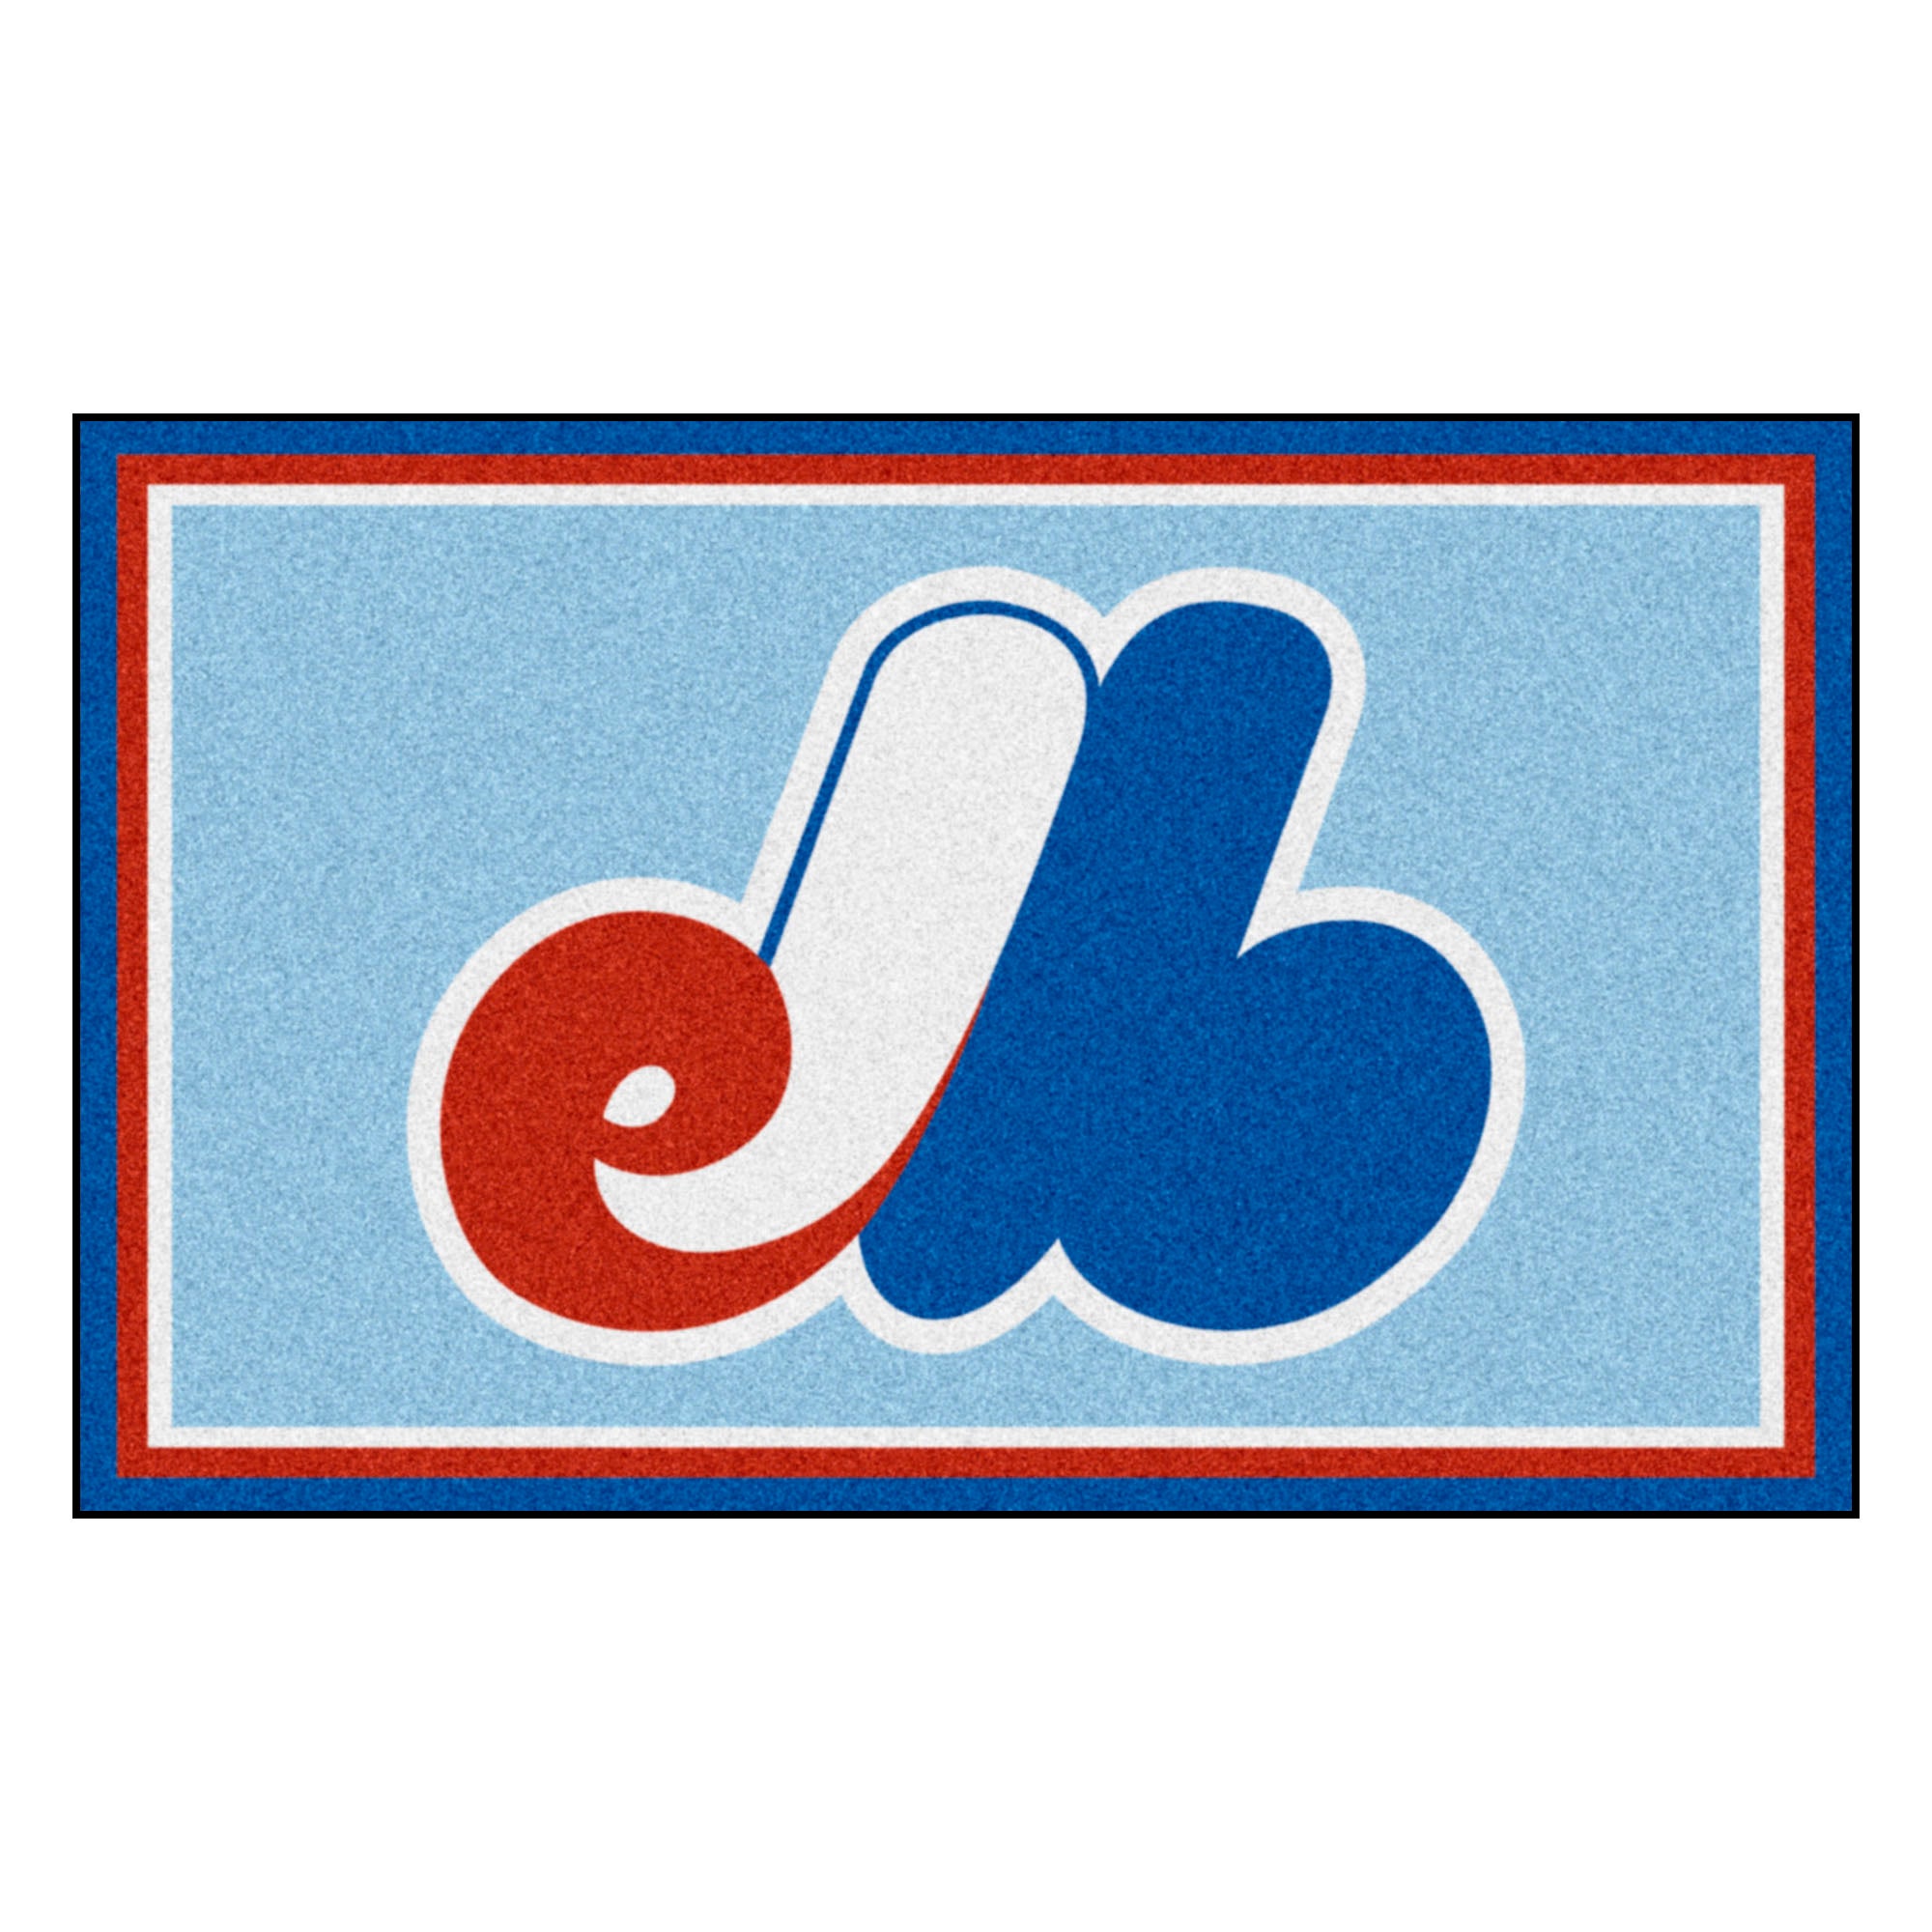 FANMATS, MLB - Washington Nationals Retro Collection 4ft. x 6ft. Plush Area Rug - (1990 Montreal Expos)